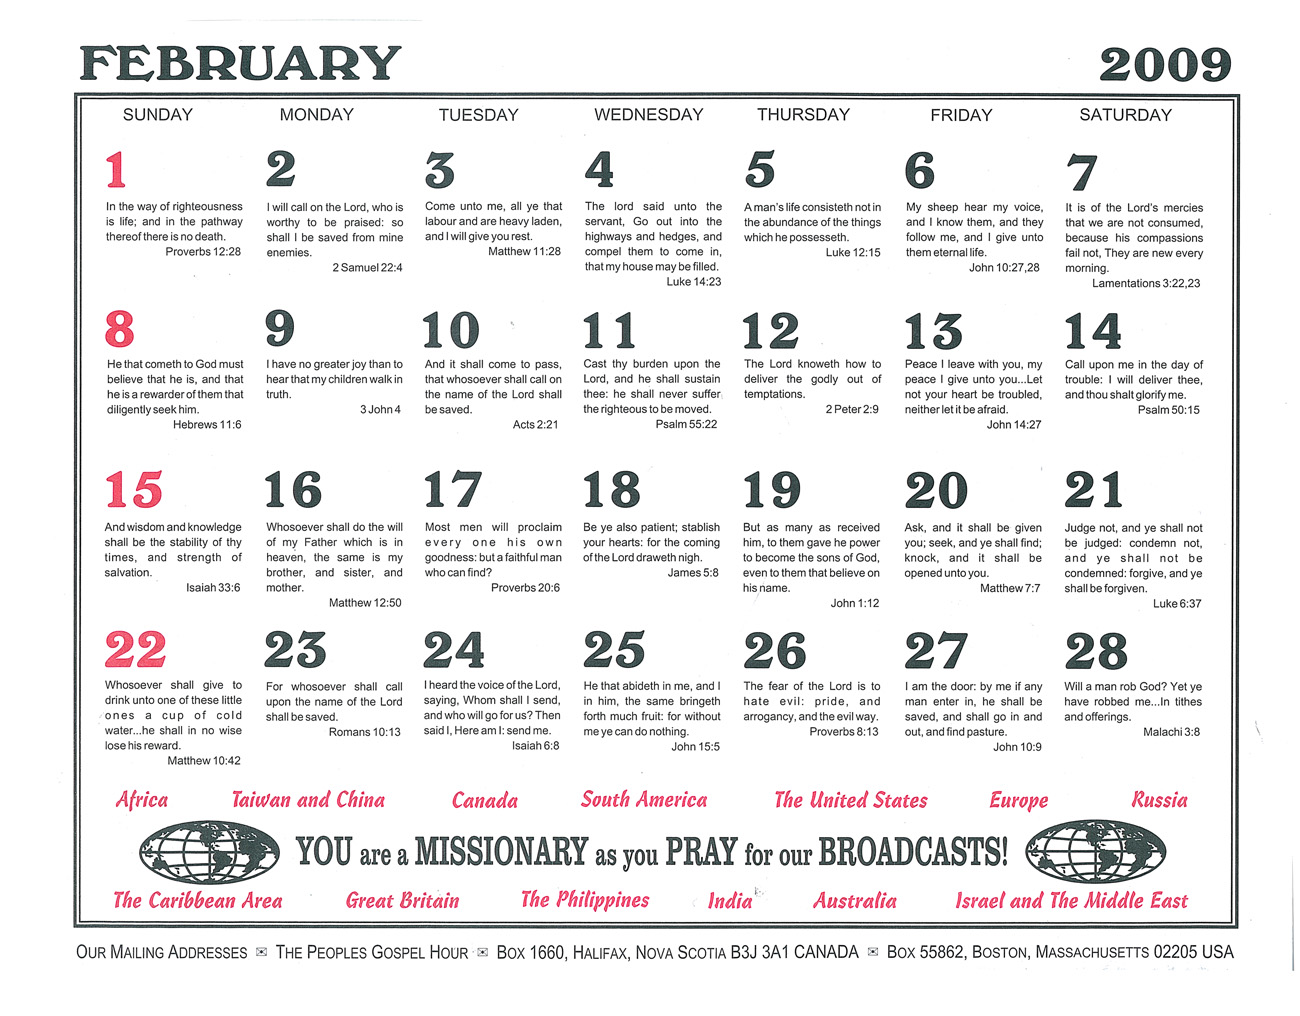 February: 2009 Daily Bible Text Calendar